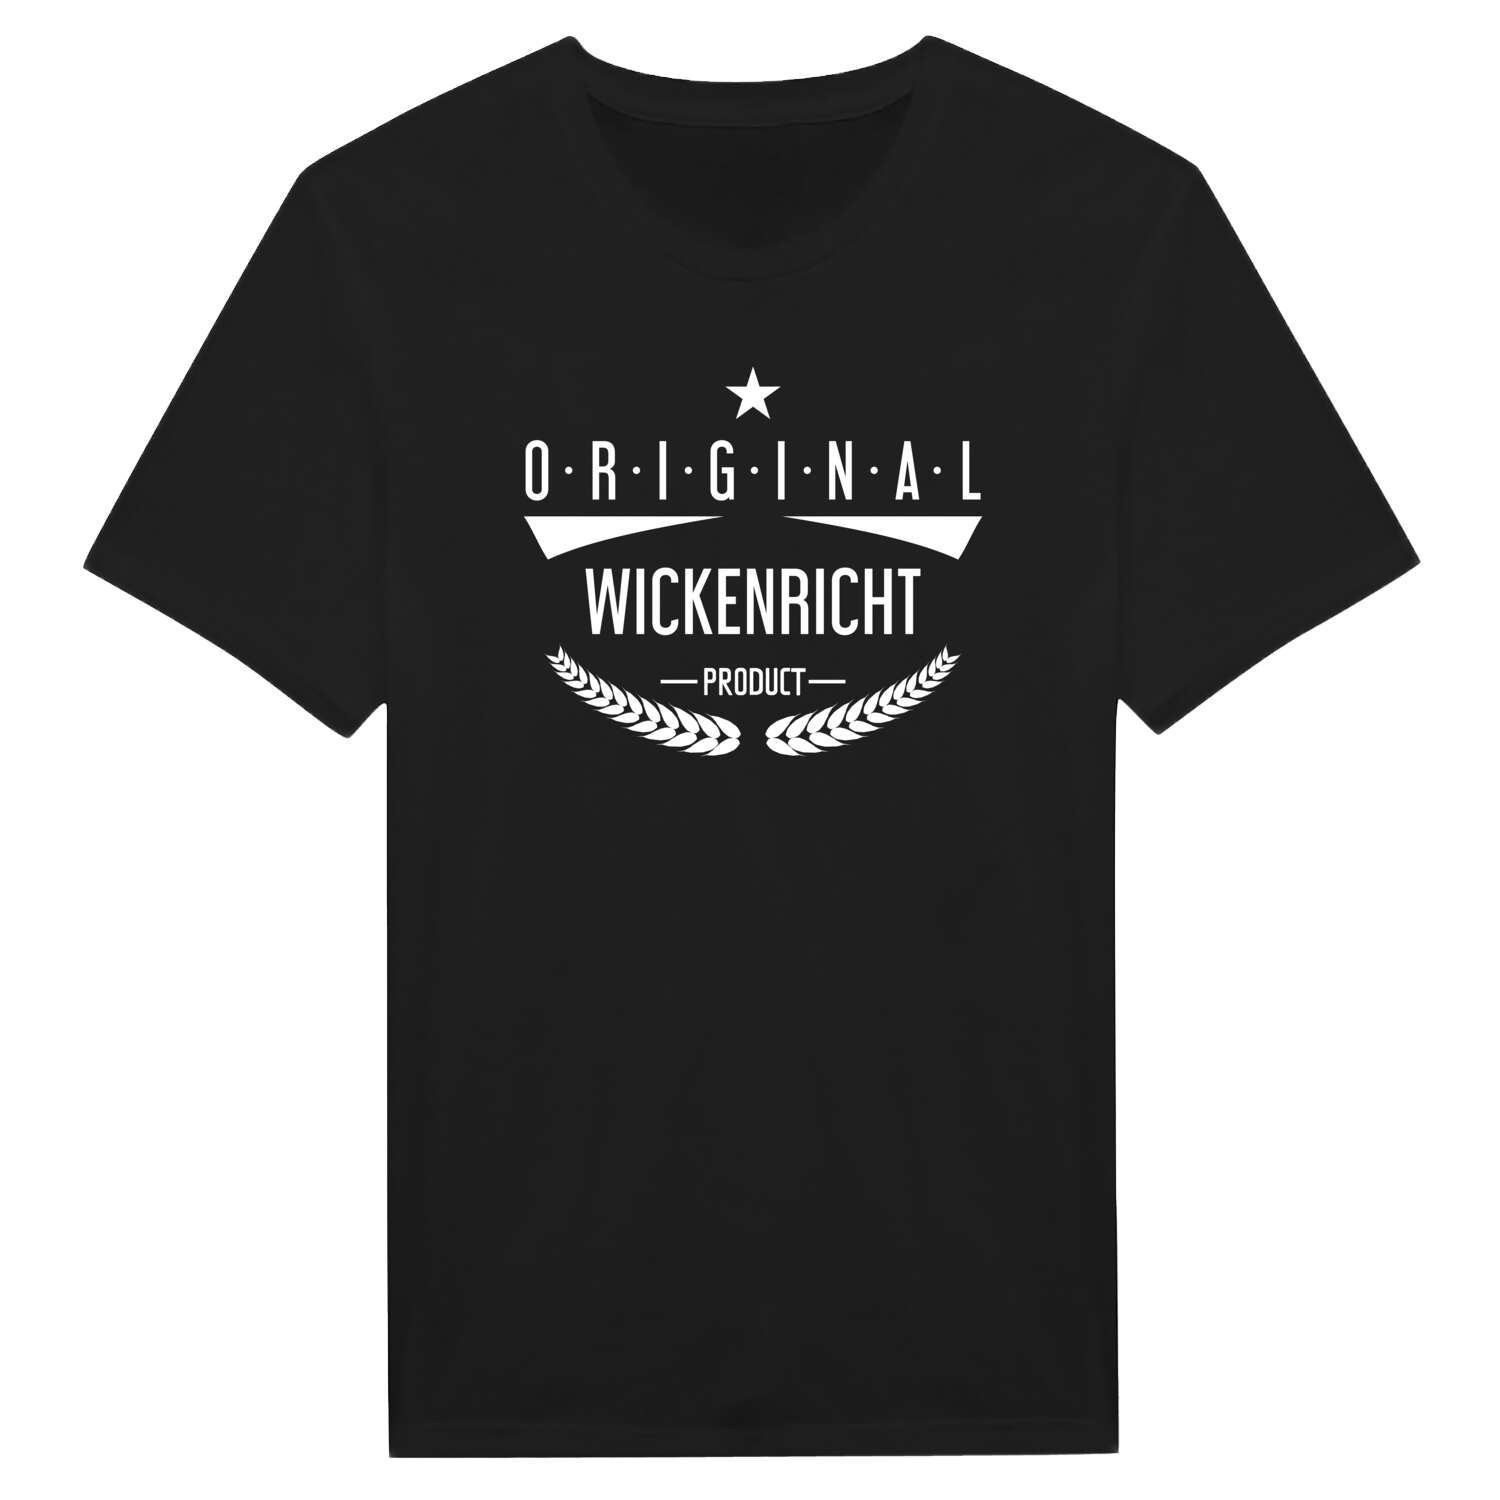 Wickenricht T-Shirt »Original Product«